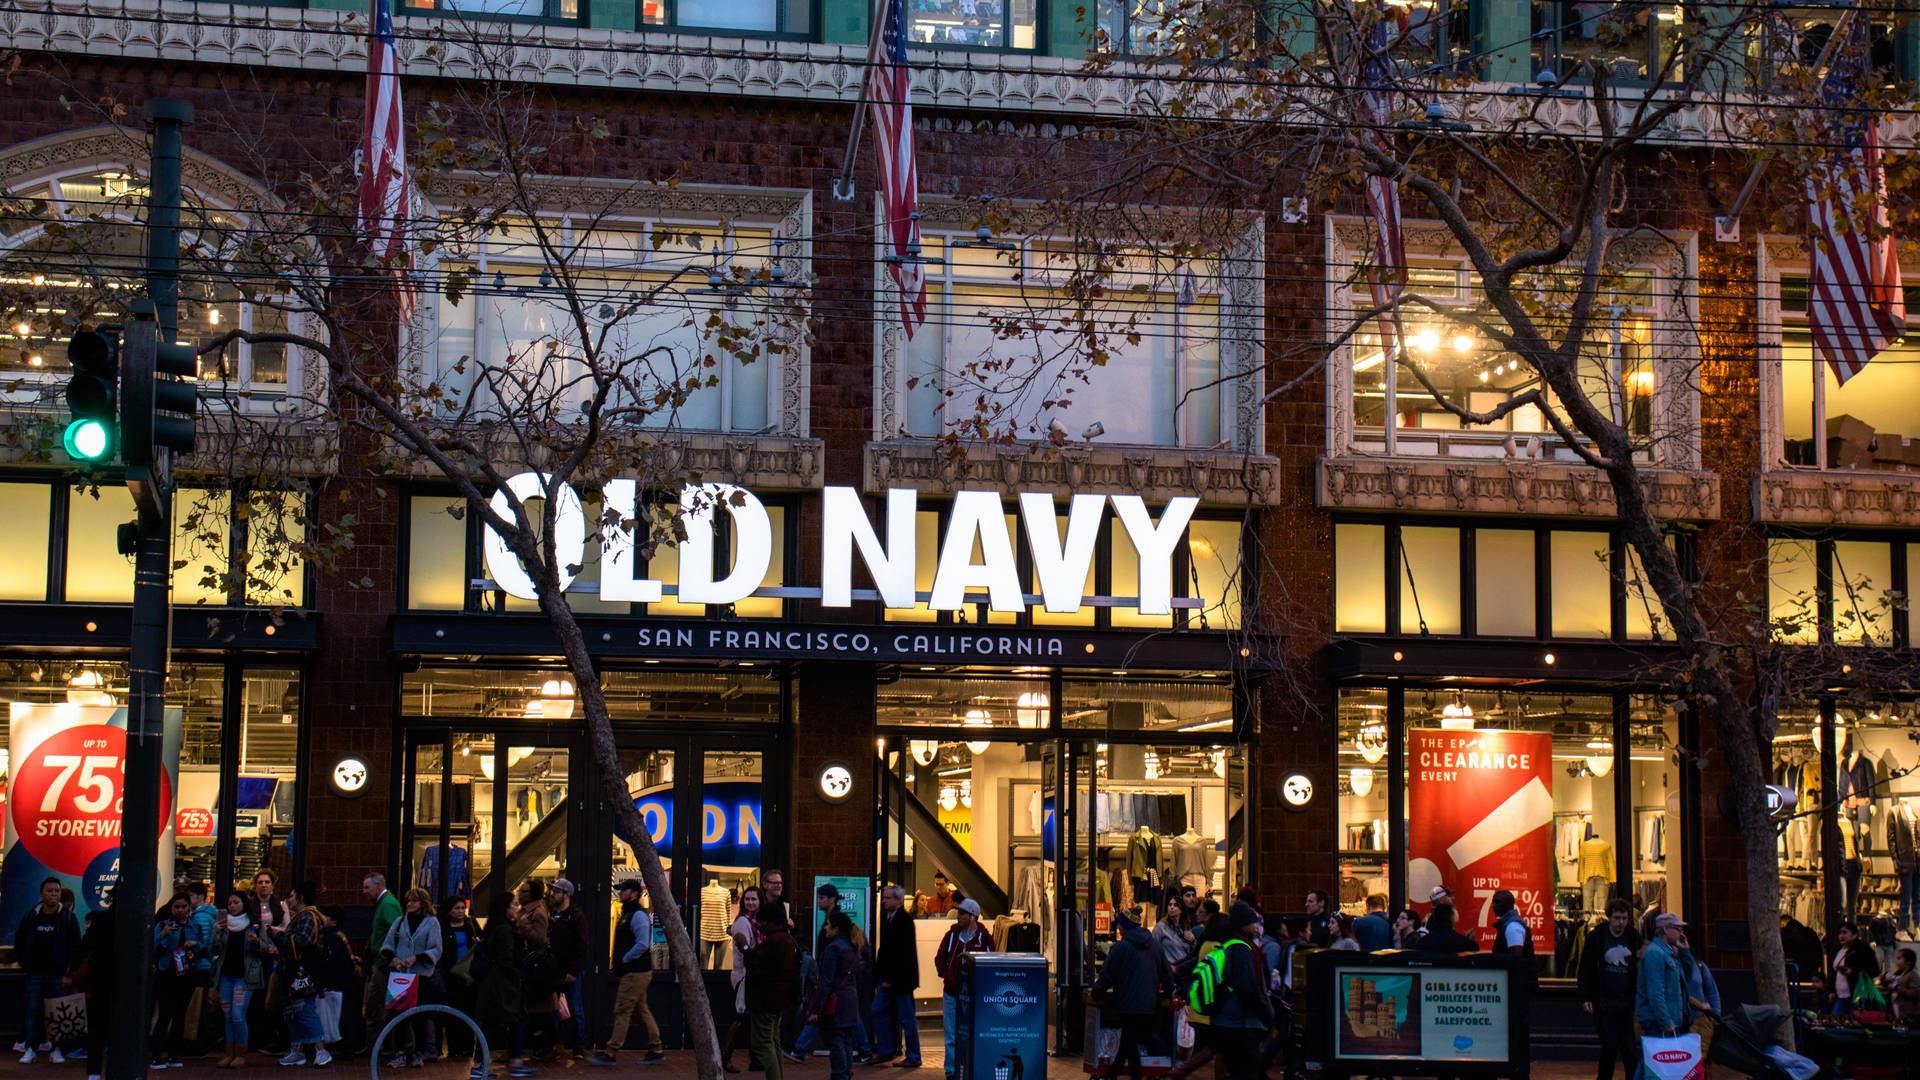 Old Navy San Francisco Store